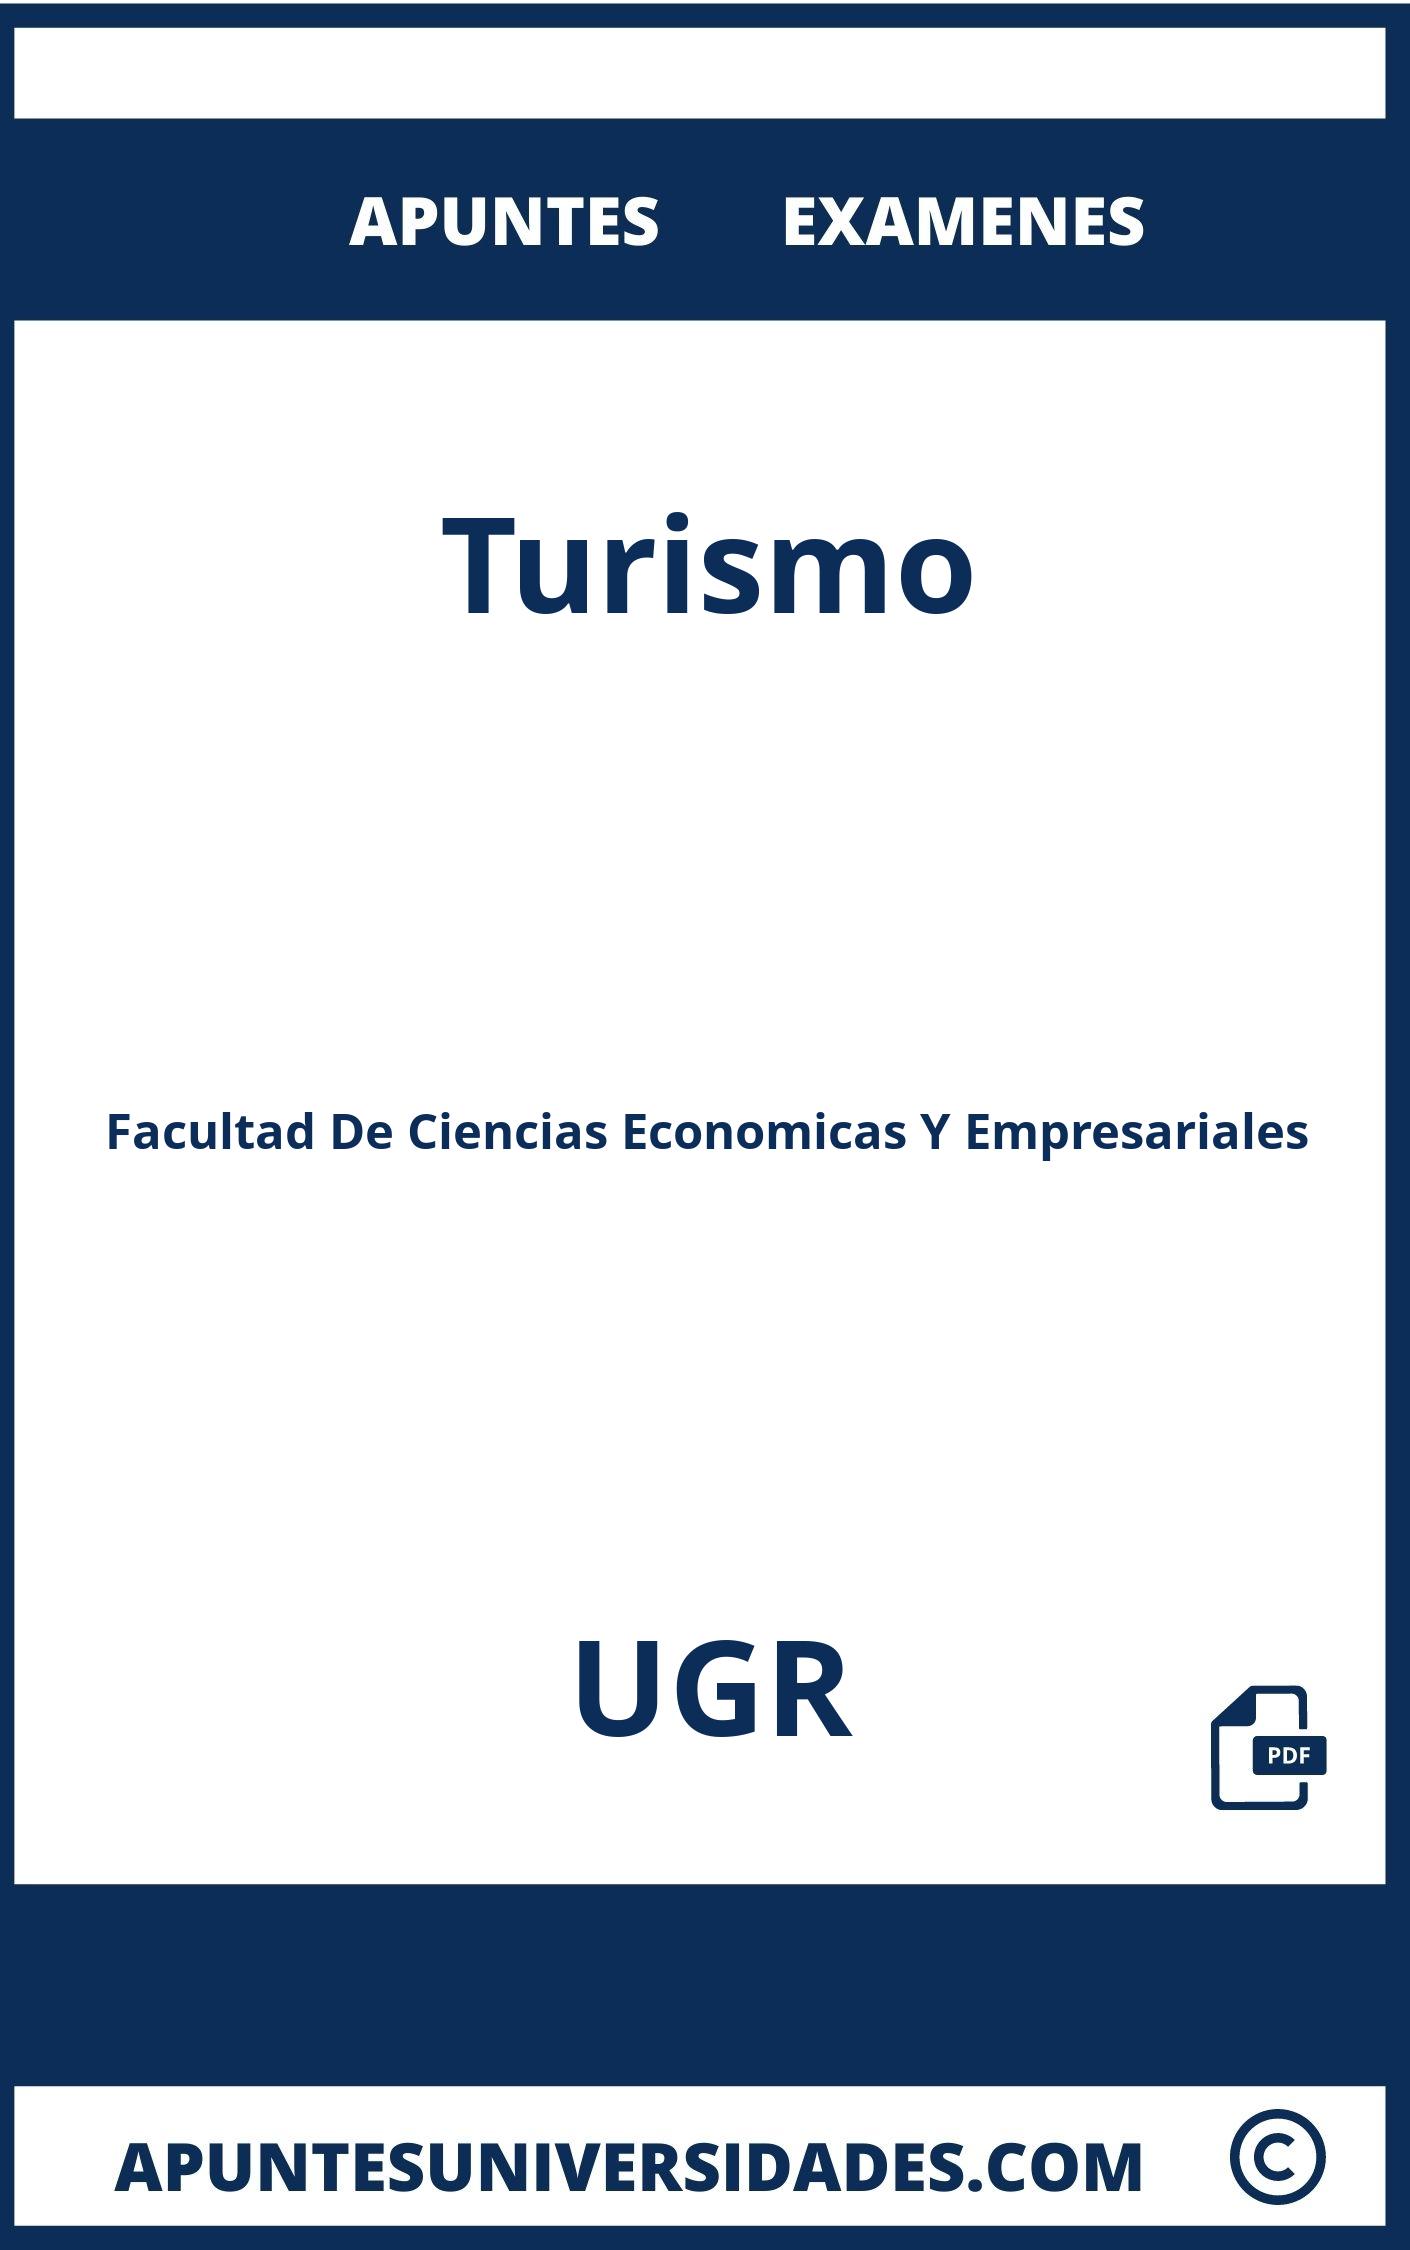 Apuntes Examenes Turismo UGR